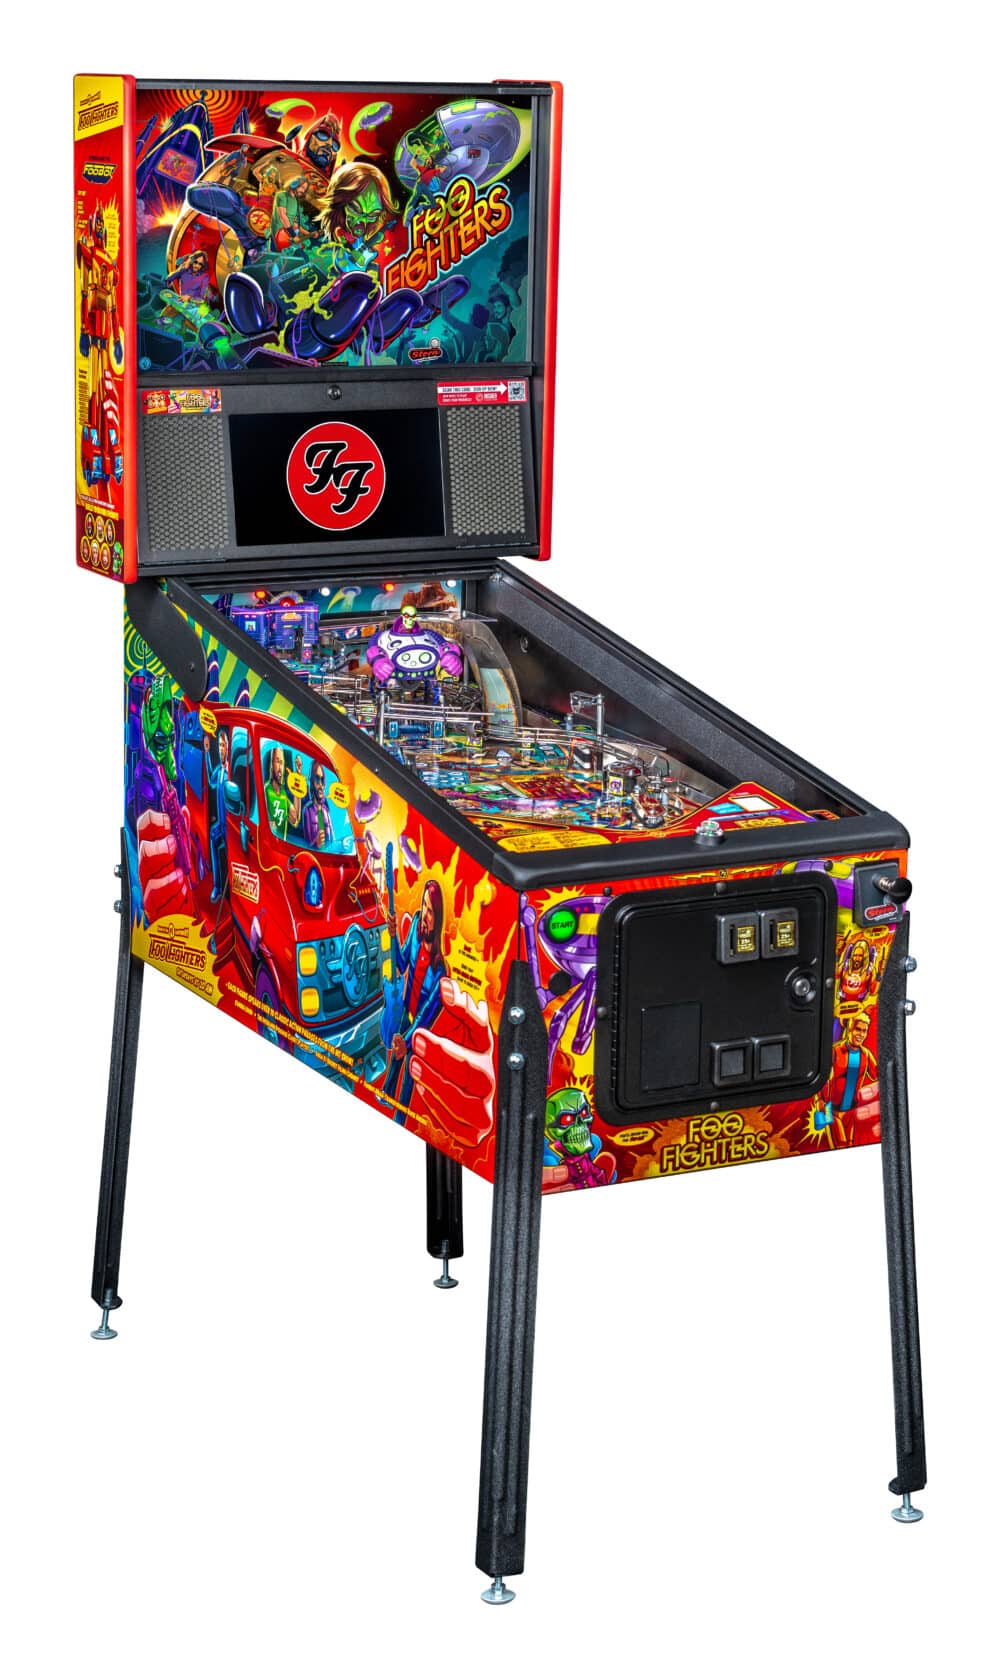 Foo Fighters Premium Edition Pinball Machine